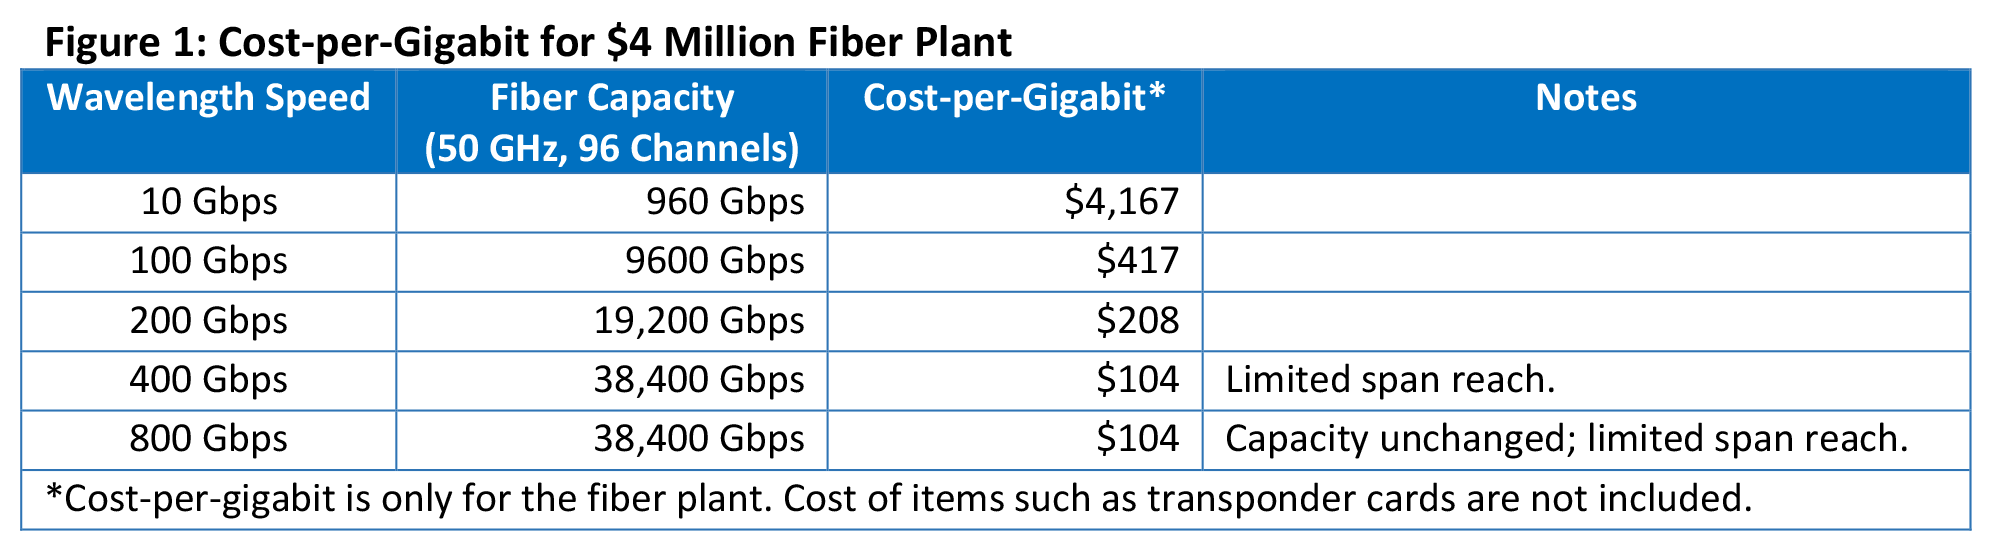 Cost-per-Gigabit for $4 Million Fiber Plant